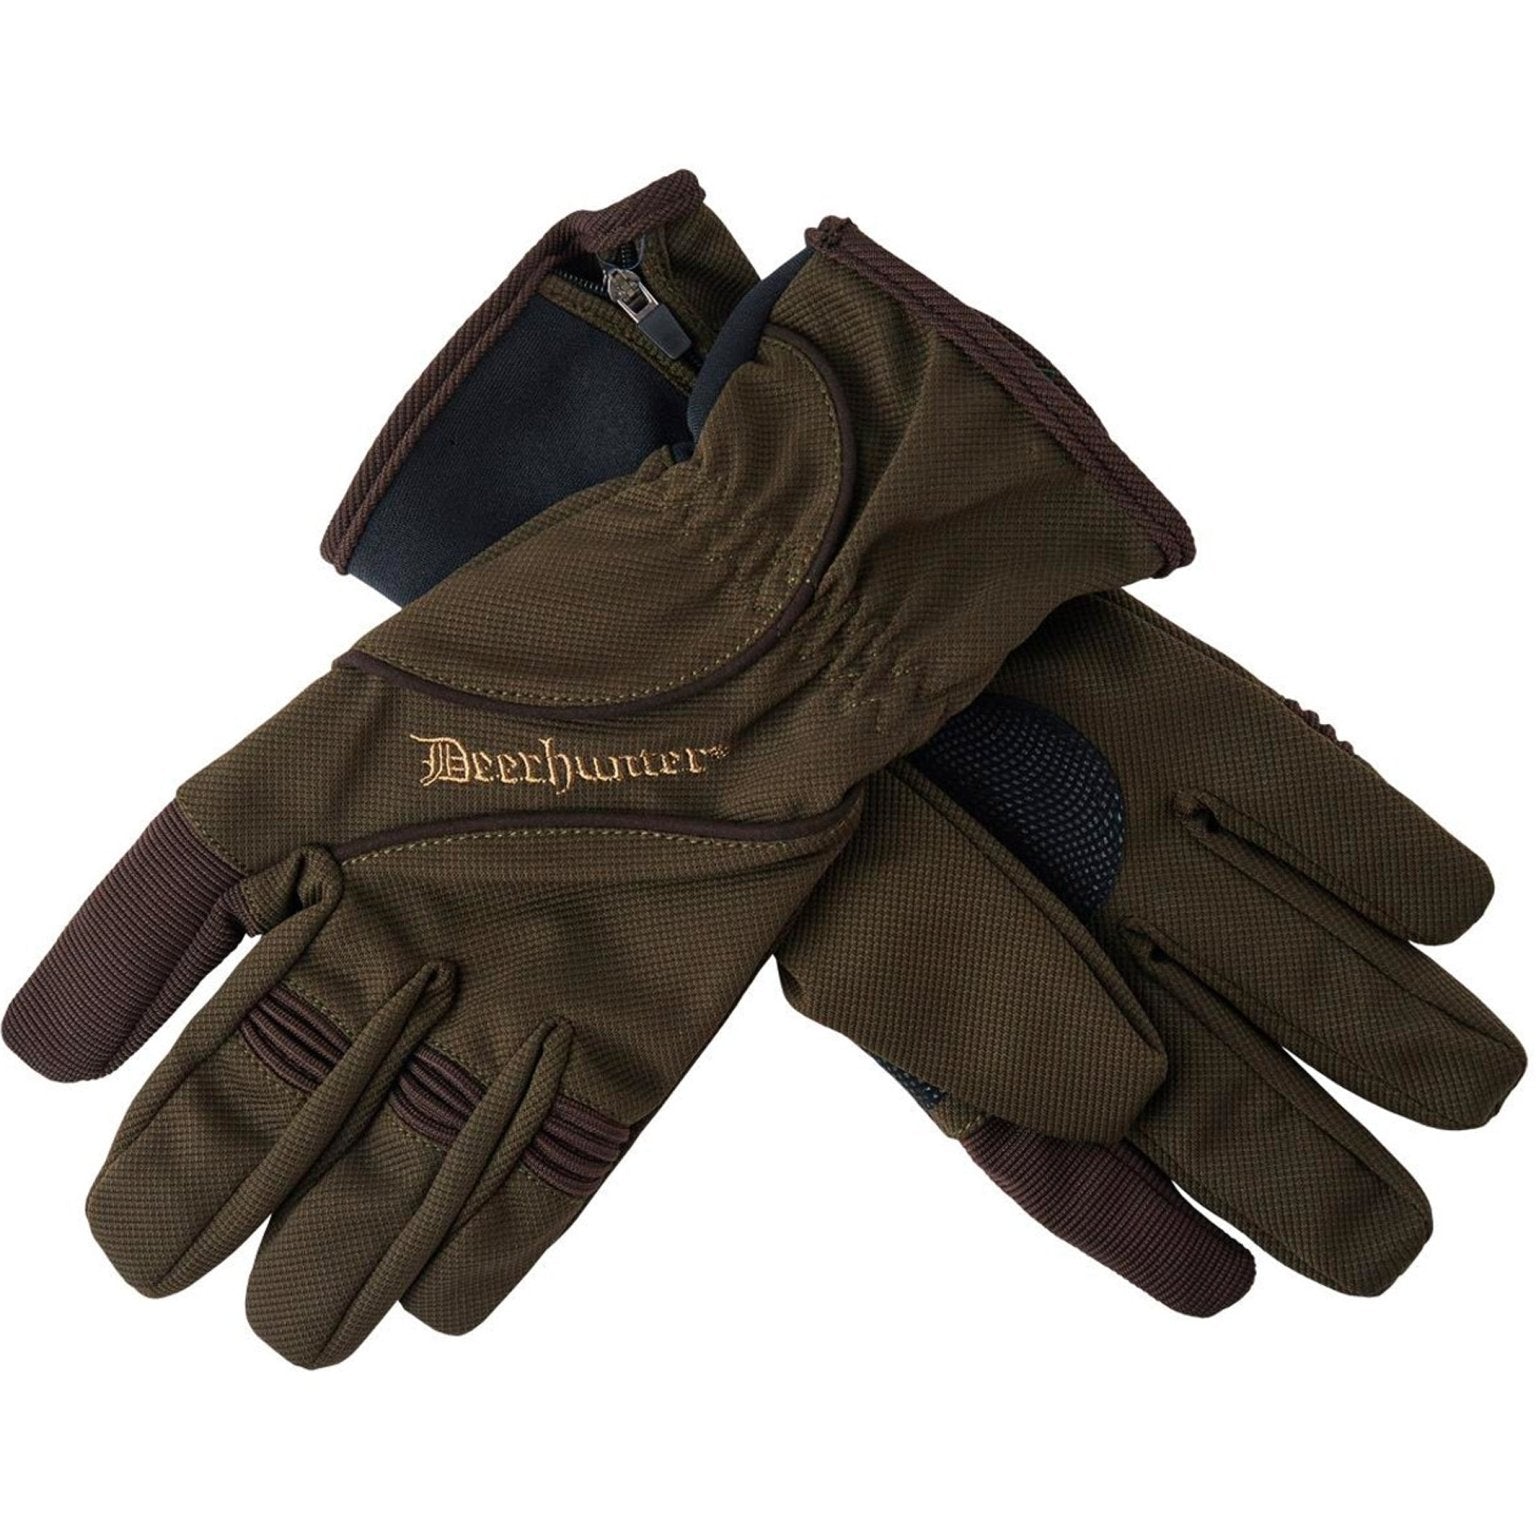 4elementsclothingDeerhunterDeerhunter - Muflon Light GlovesGloves8630-376-M